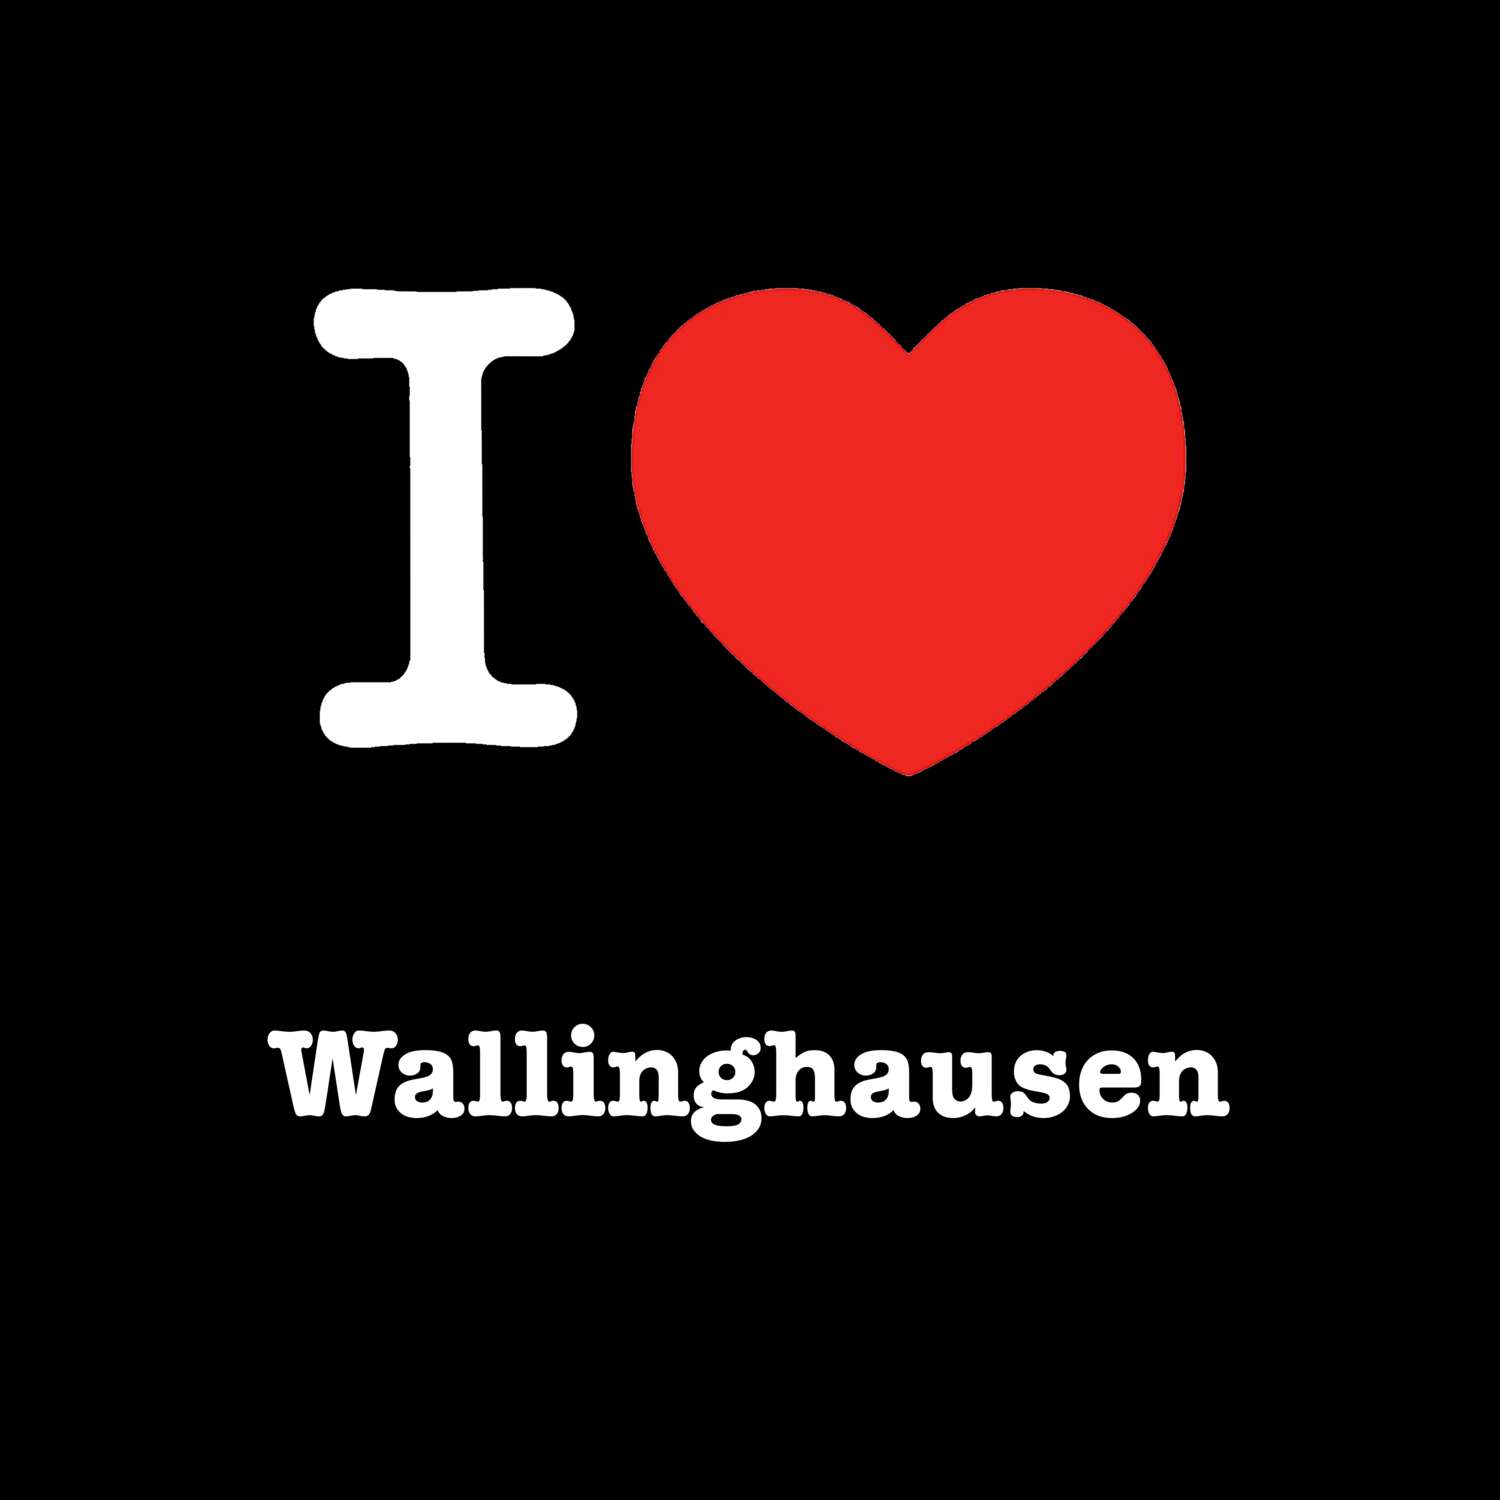 Wallinghausen T-Shirt »I love«